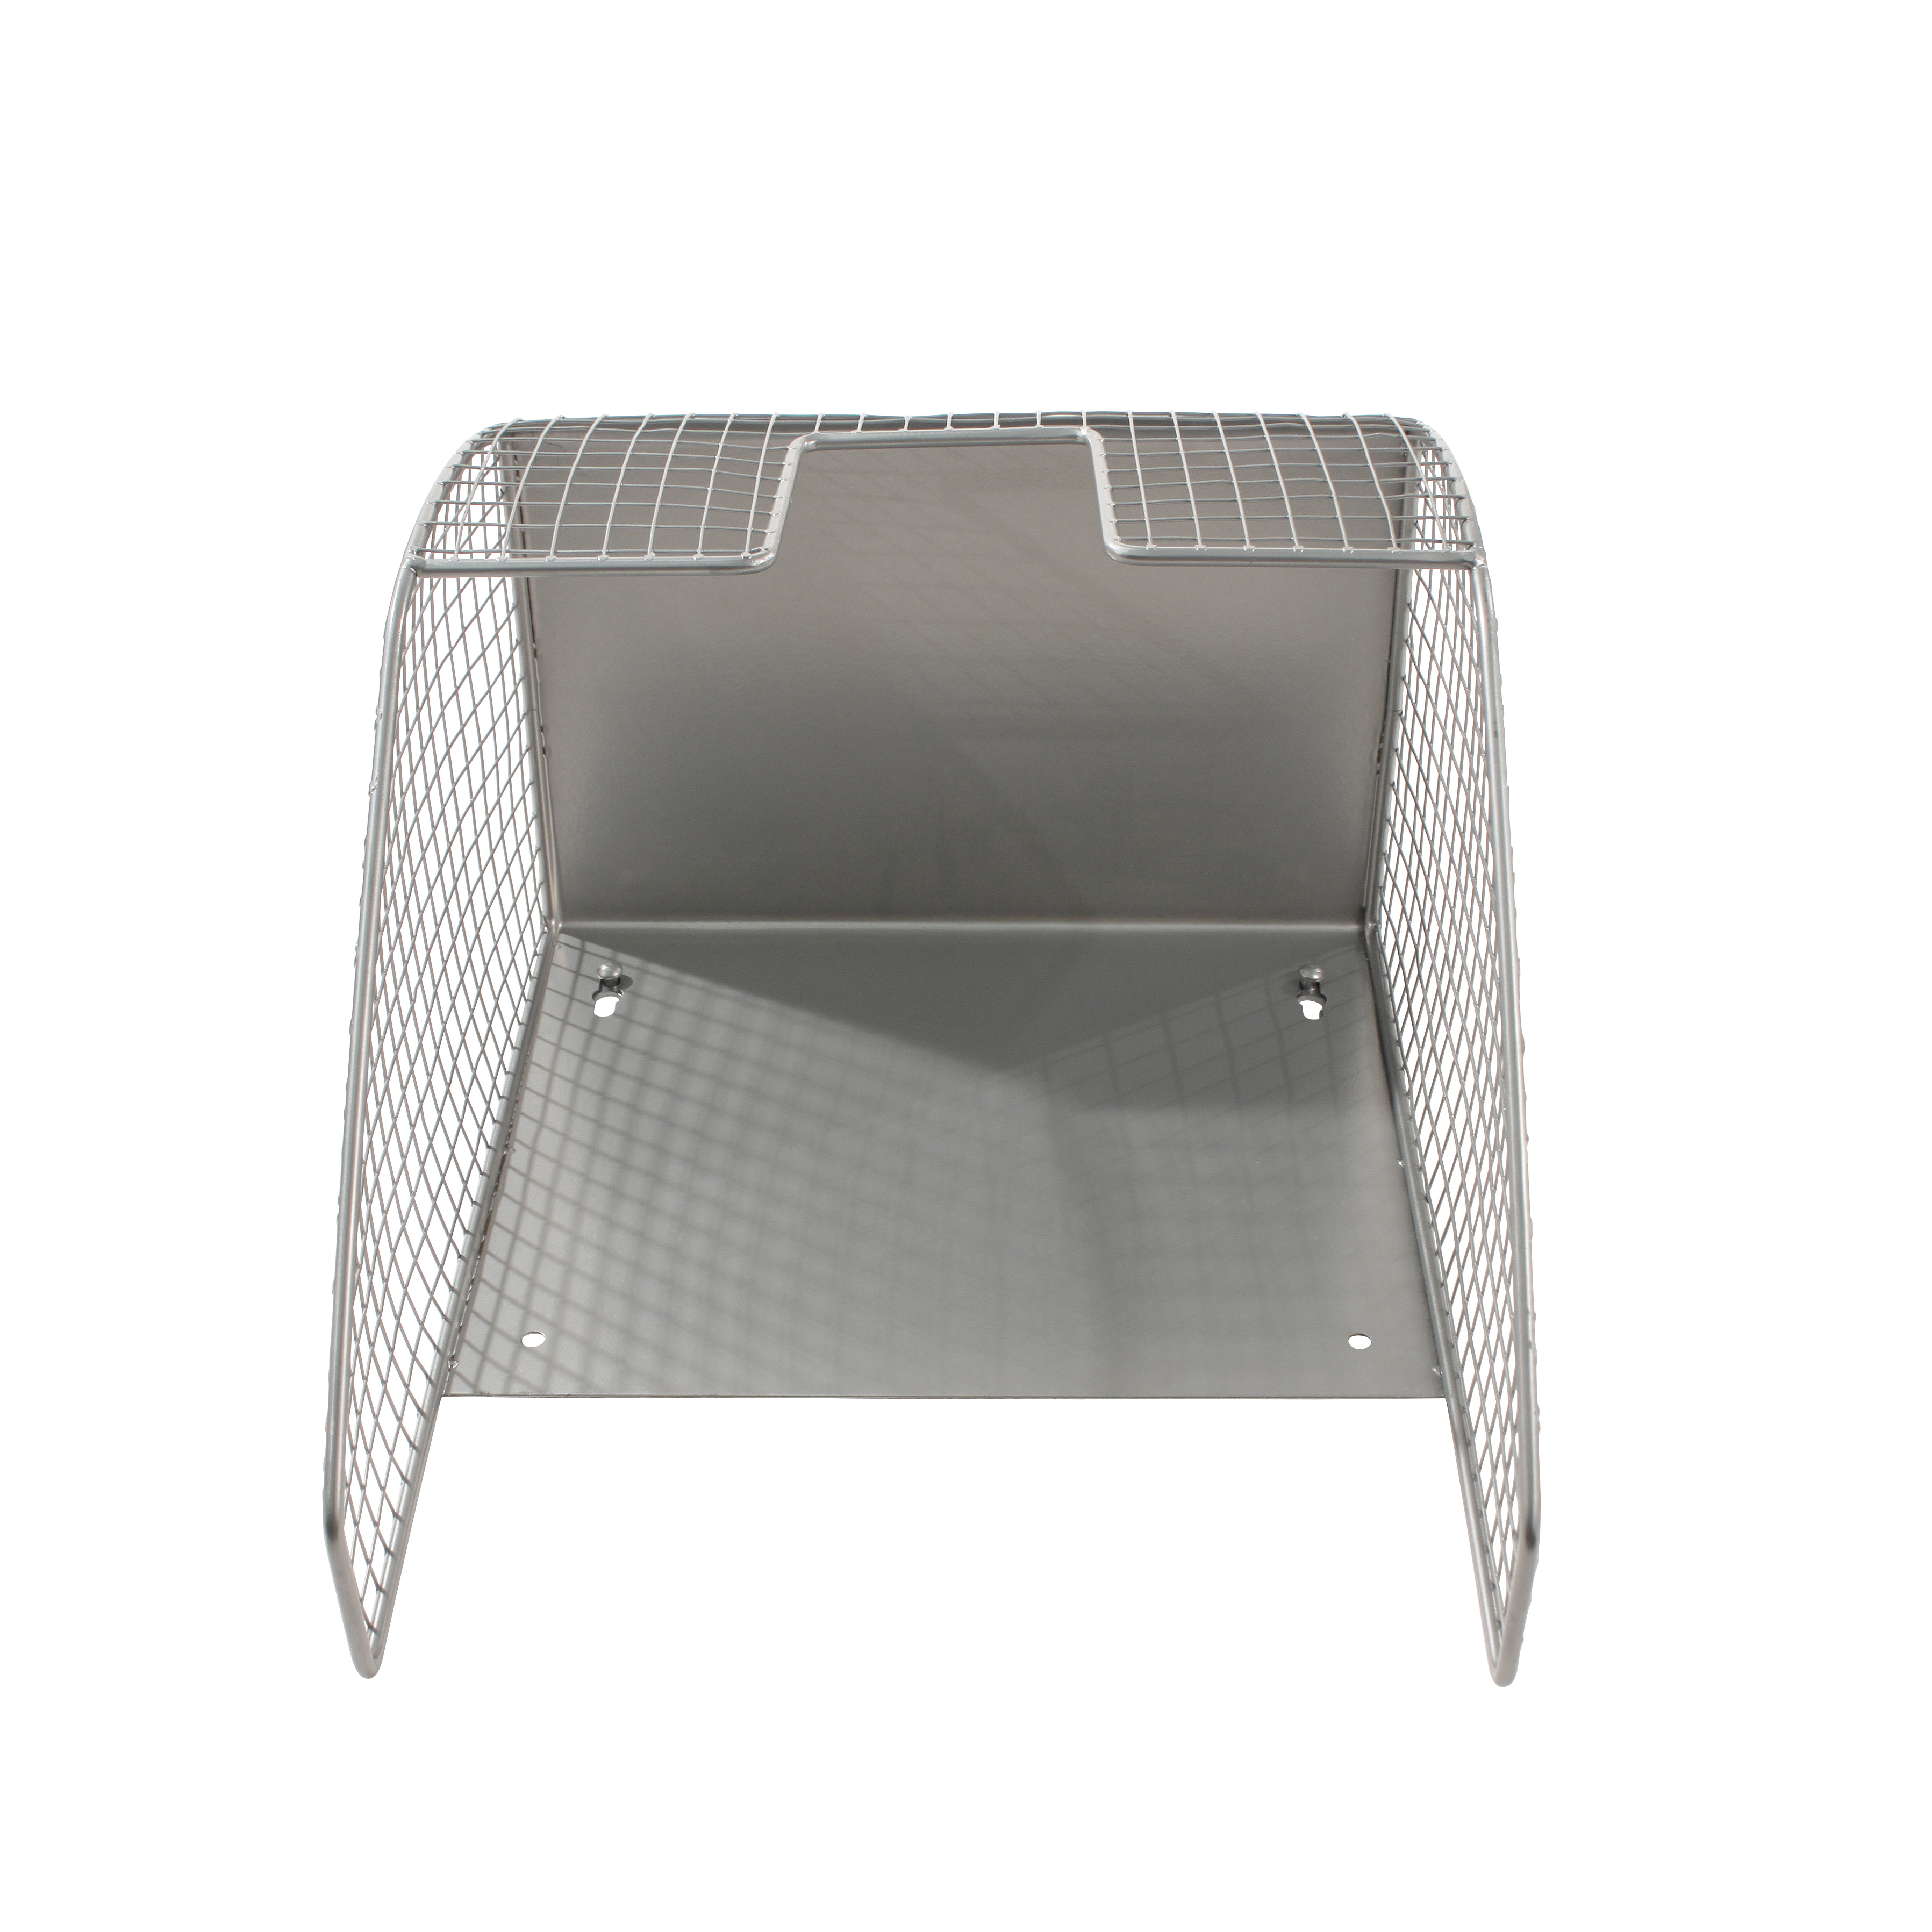 Spectrum Diversified Steel Ironing Board Holder with Storage Basket, Heat Resistant, Pewter - image 4 of 5